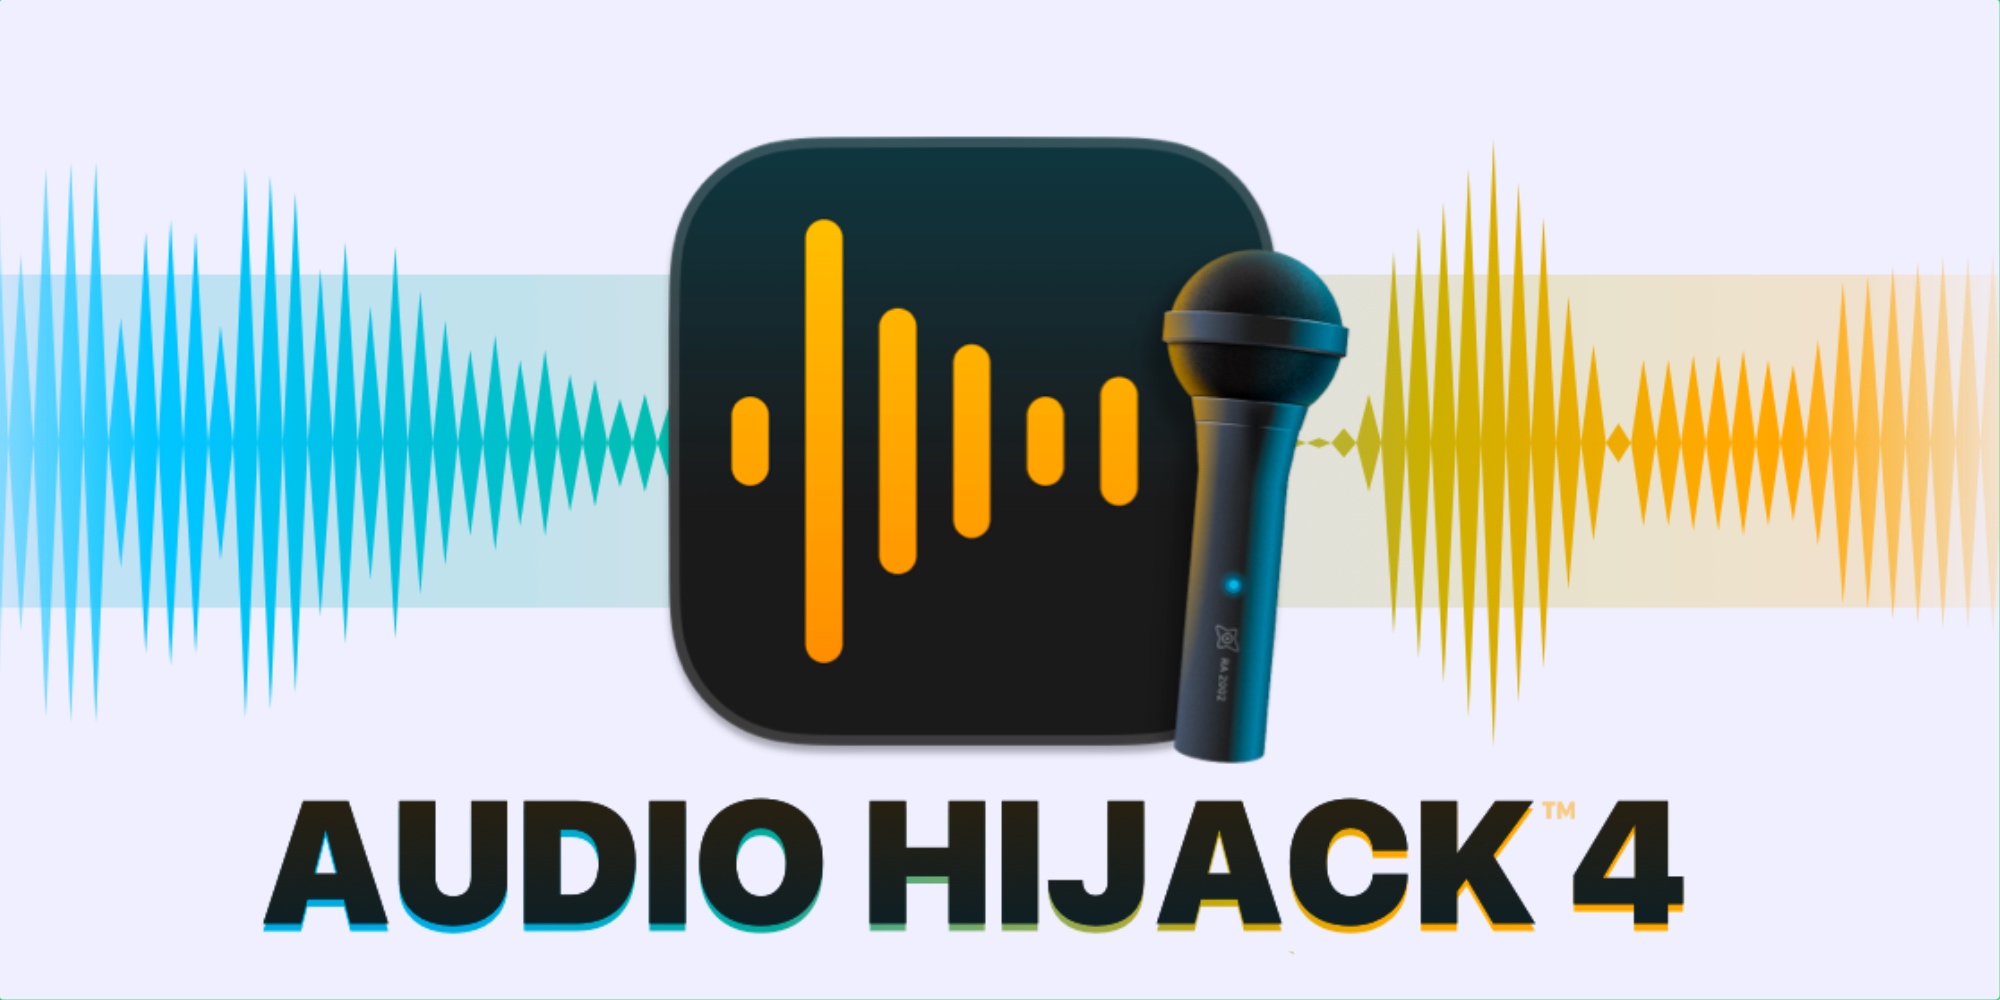 mac audio hijack